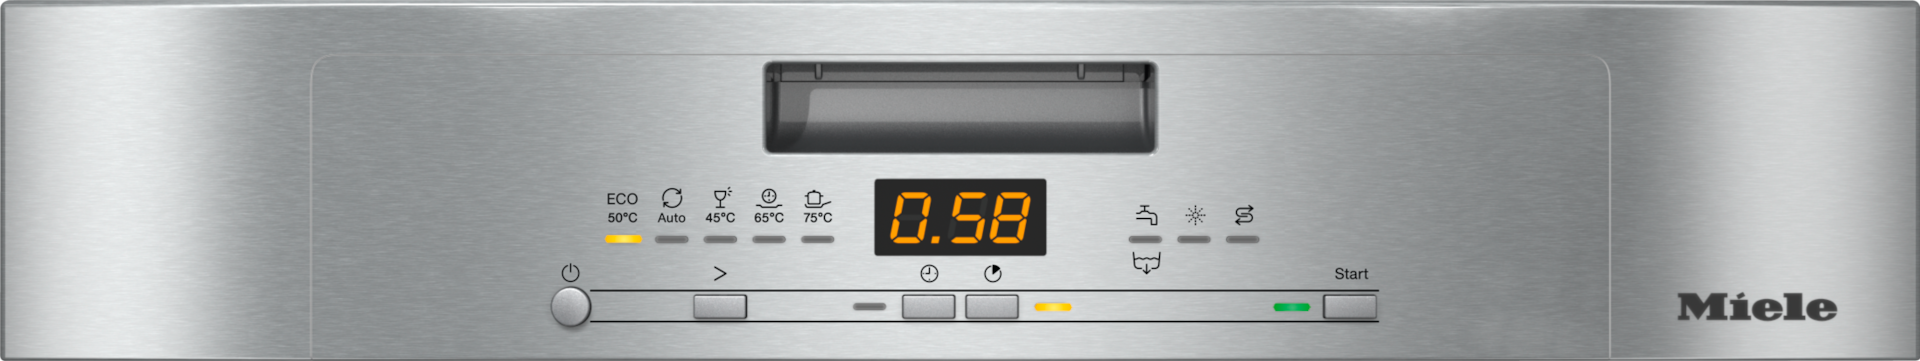 Lave-vaisselle - G 5000 U Active Inox CleanSteel - 3